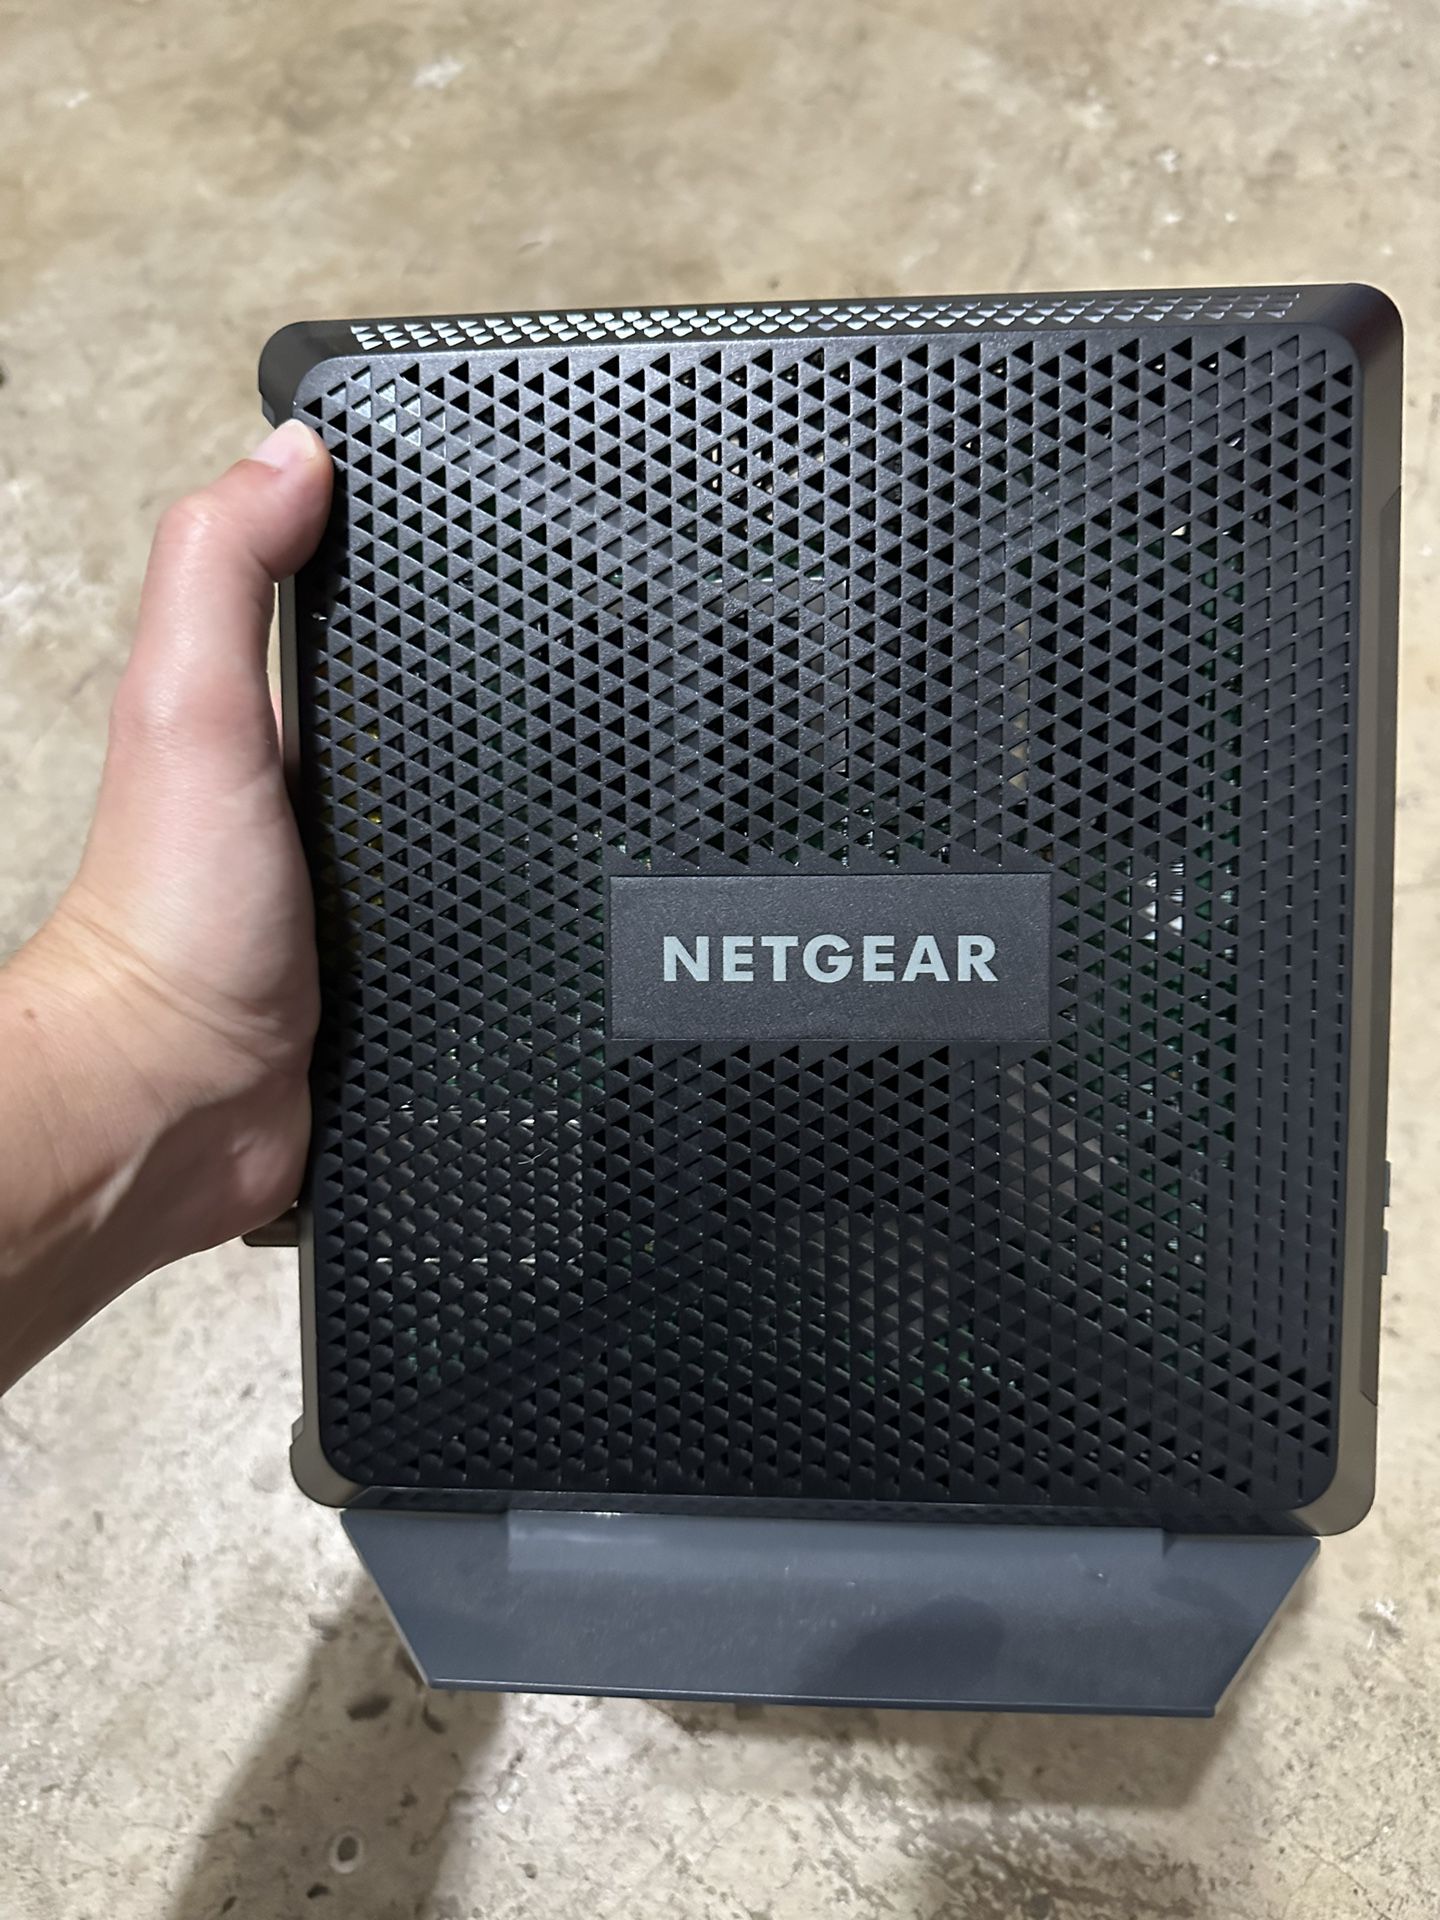 Netgear Cable Modem Wi-Fi Router combo